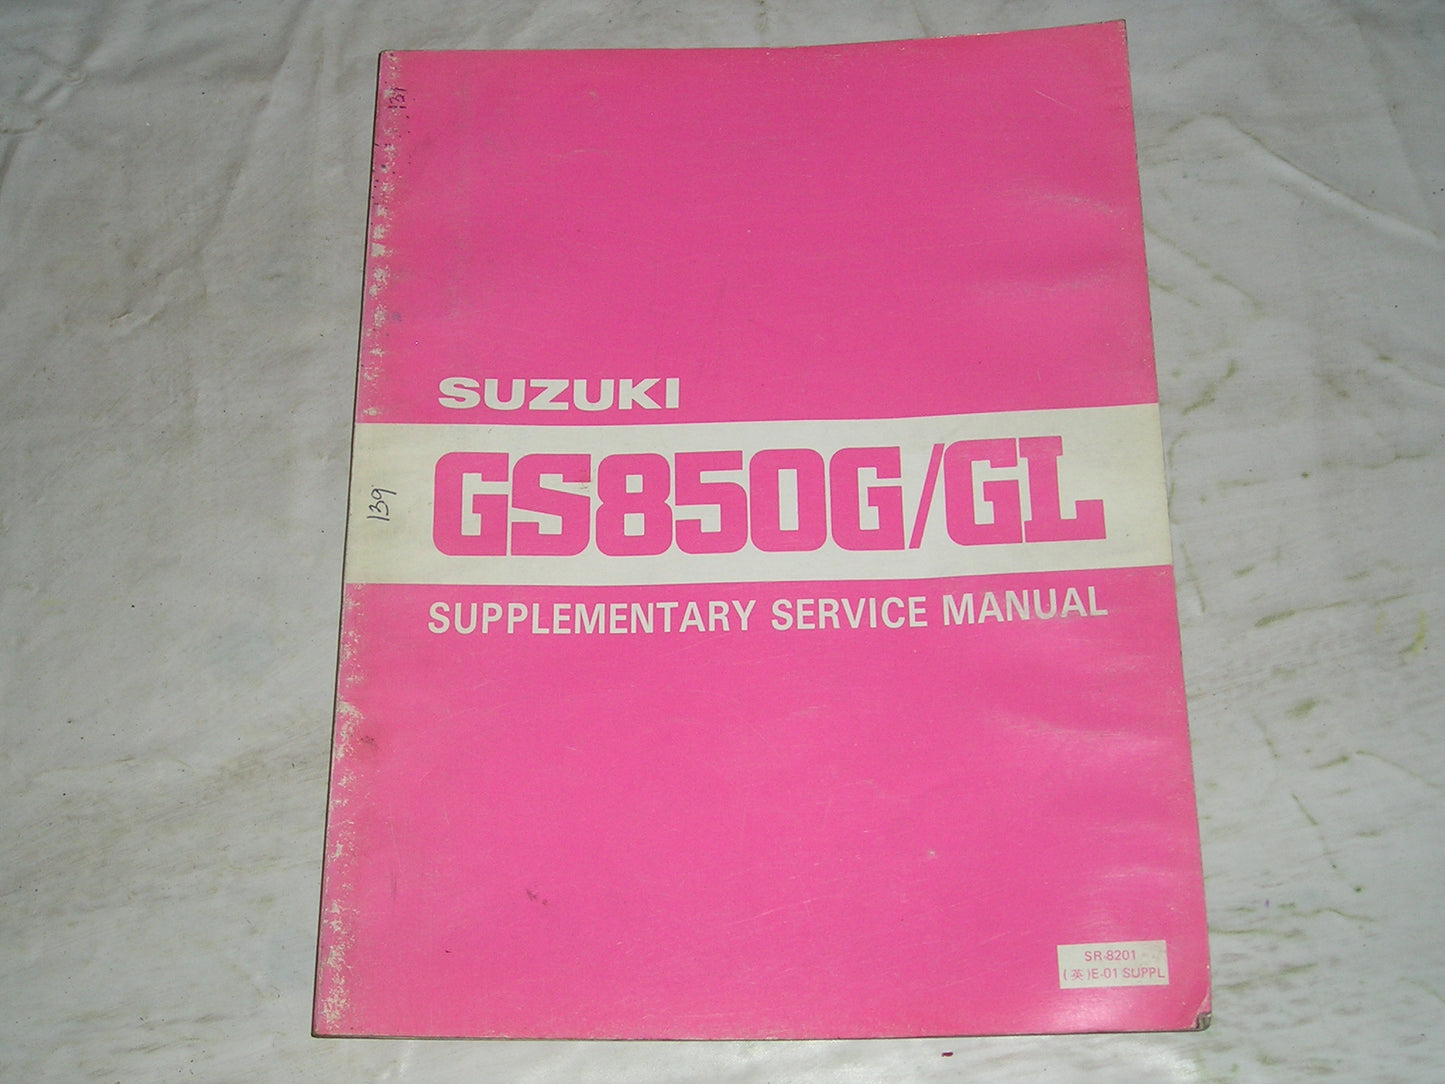 SUZUKI GS850G X & GS850GL X 1981  Service Manual Supplement  SR-8201 E-01 SUPPL  #139